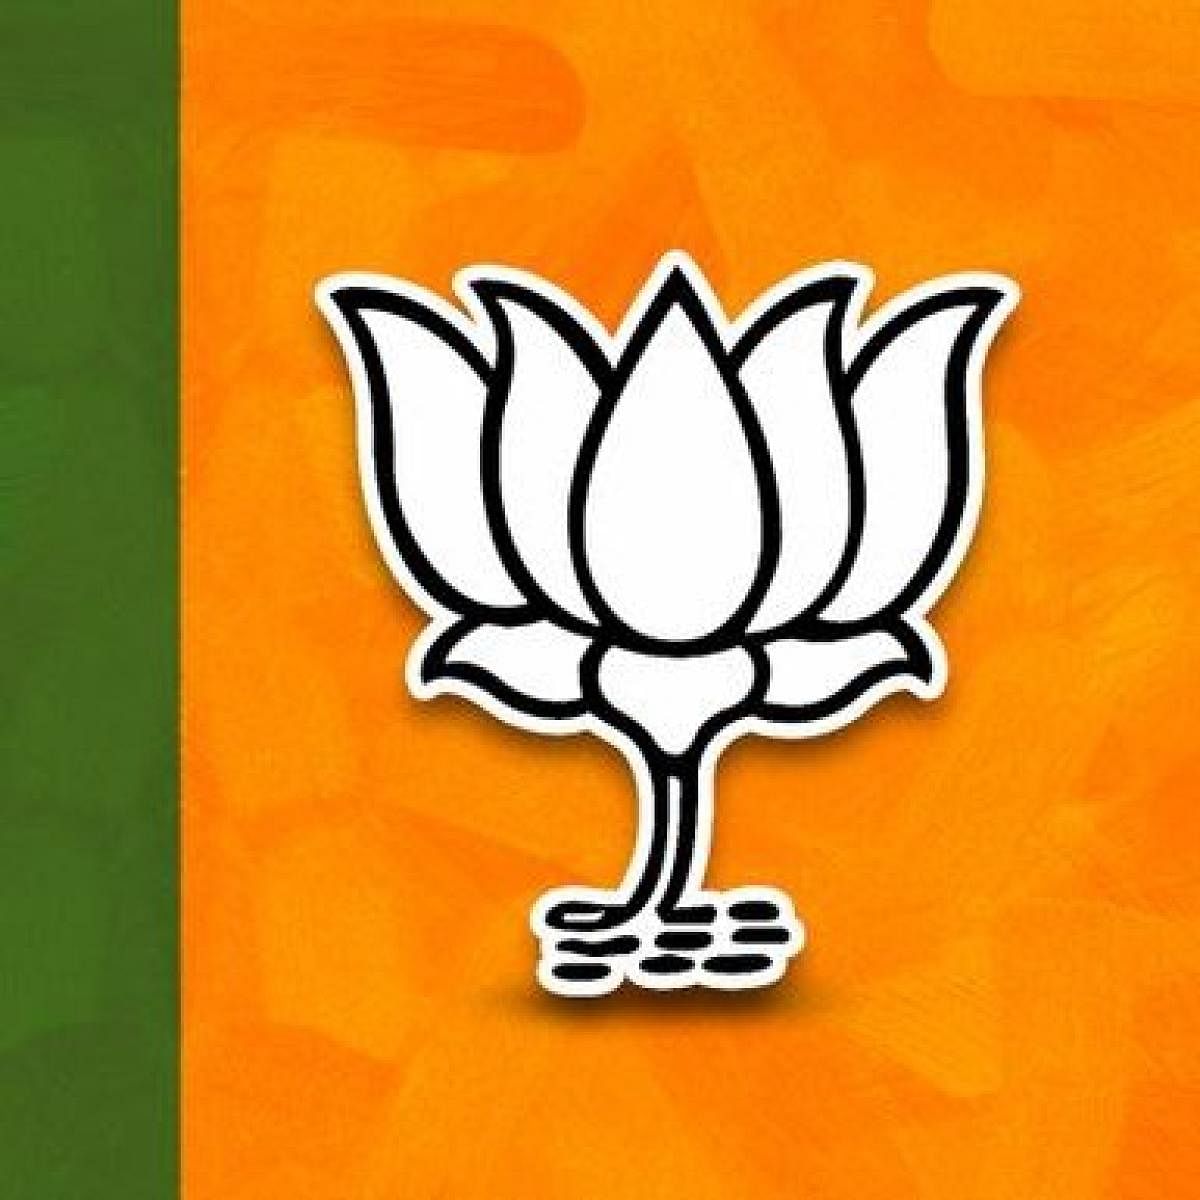 BJP logo. Credit: DH file image